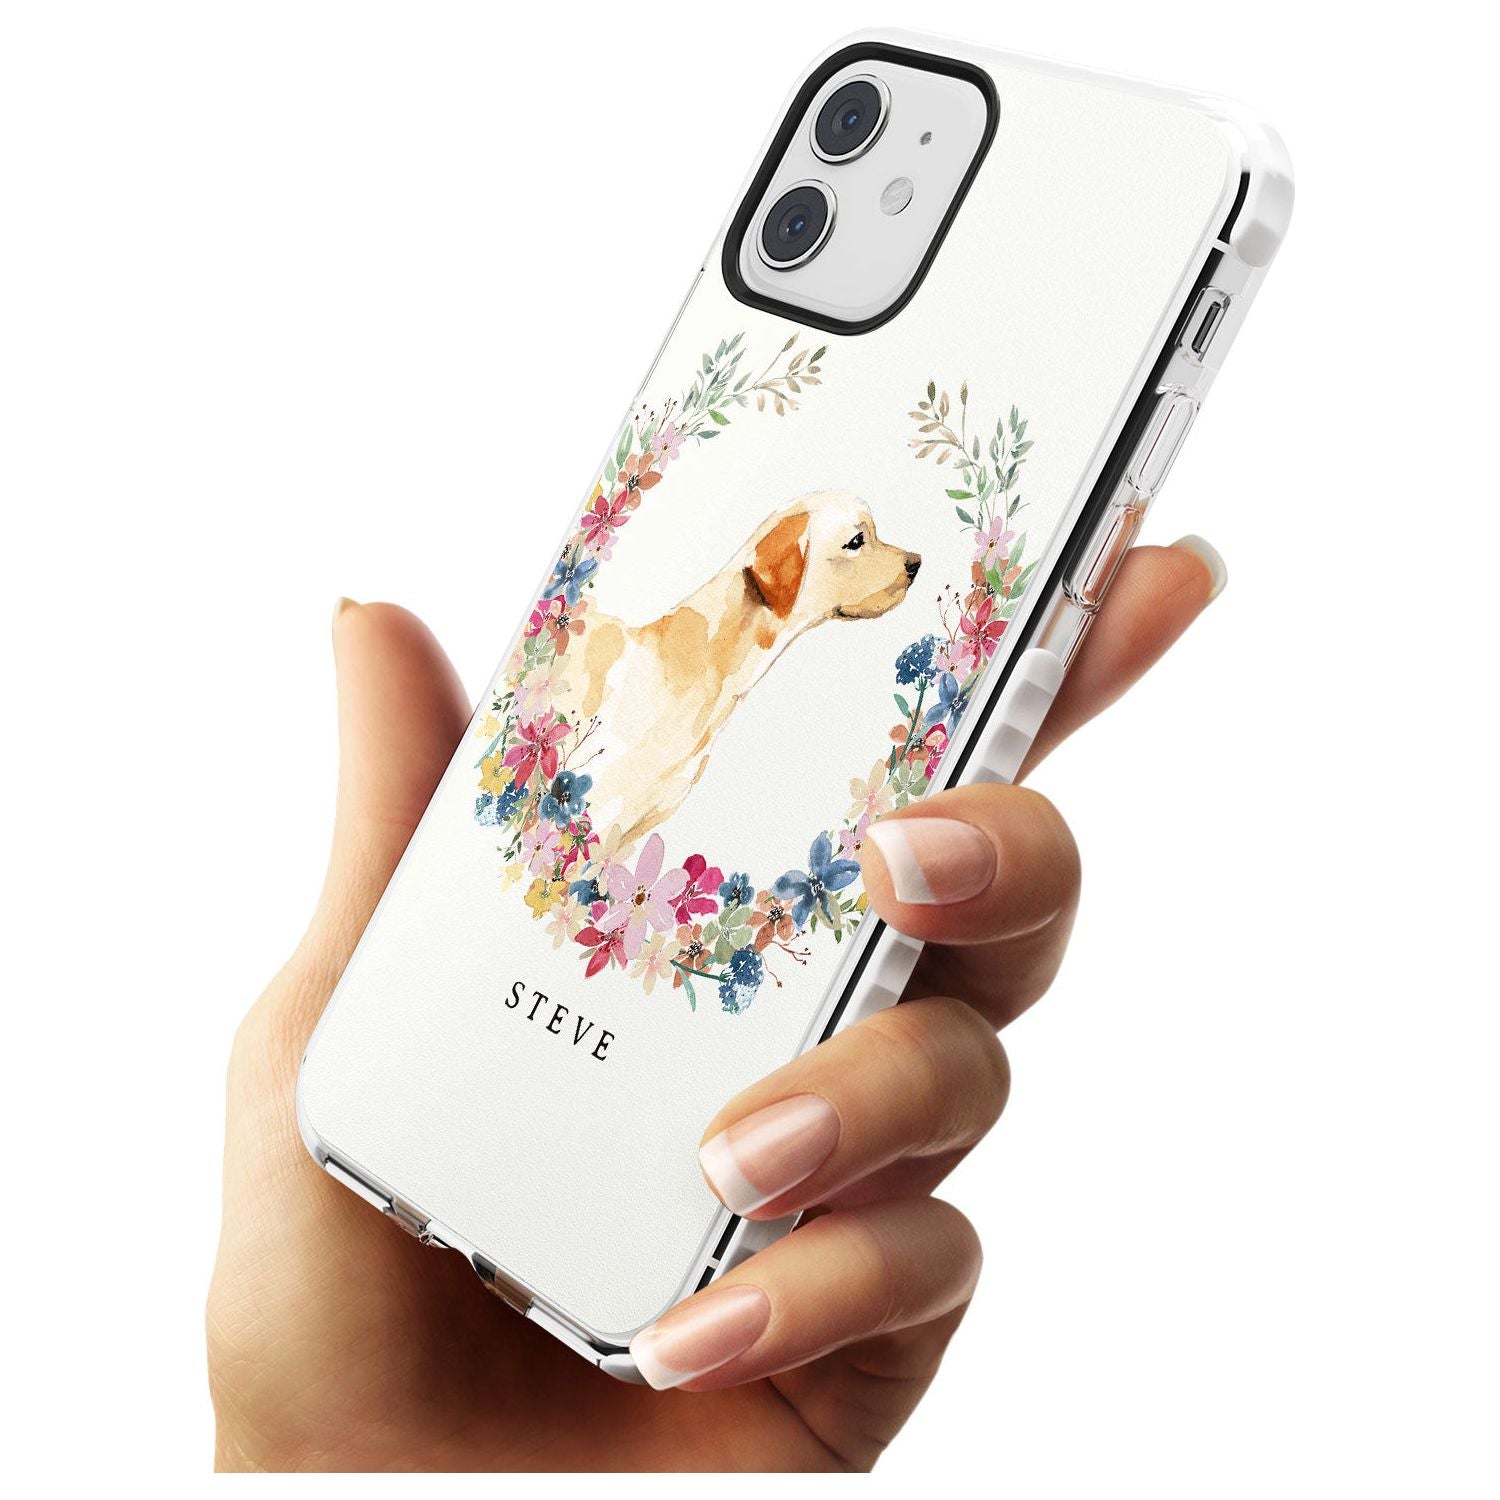 Yellow Labrador - Watercolour Dog Portrait Impact Phone Case for iPhone 11